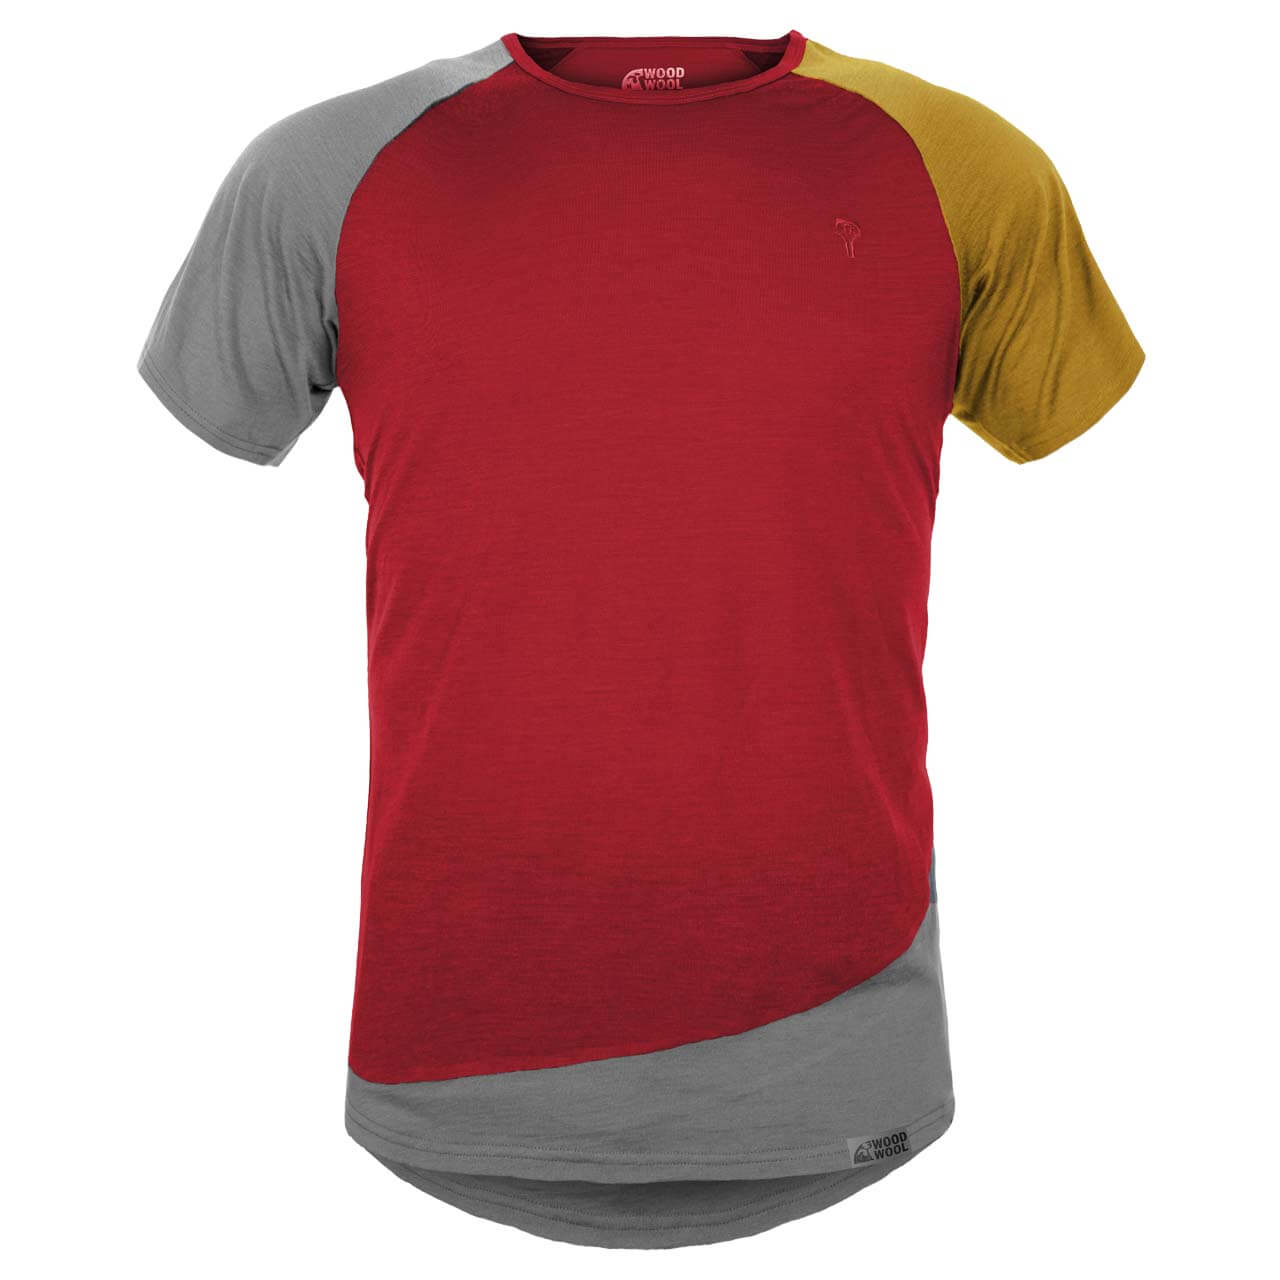 Grüezi Bag WoodWool T-Shirt Mr. Kirk - Fired Red Brick, S von Grüezi Bag